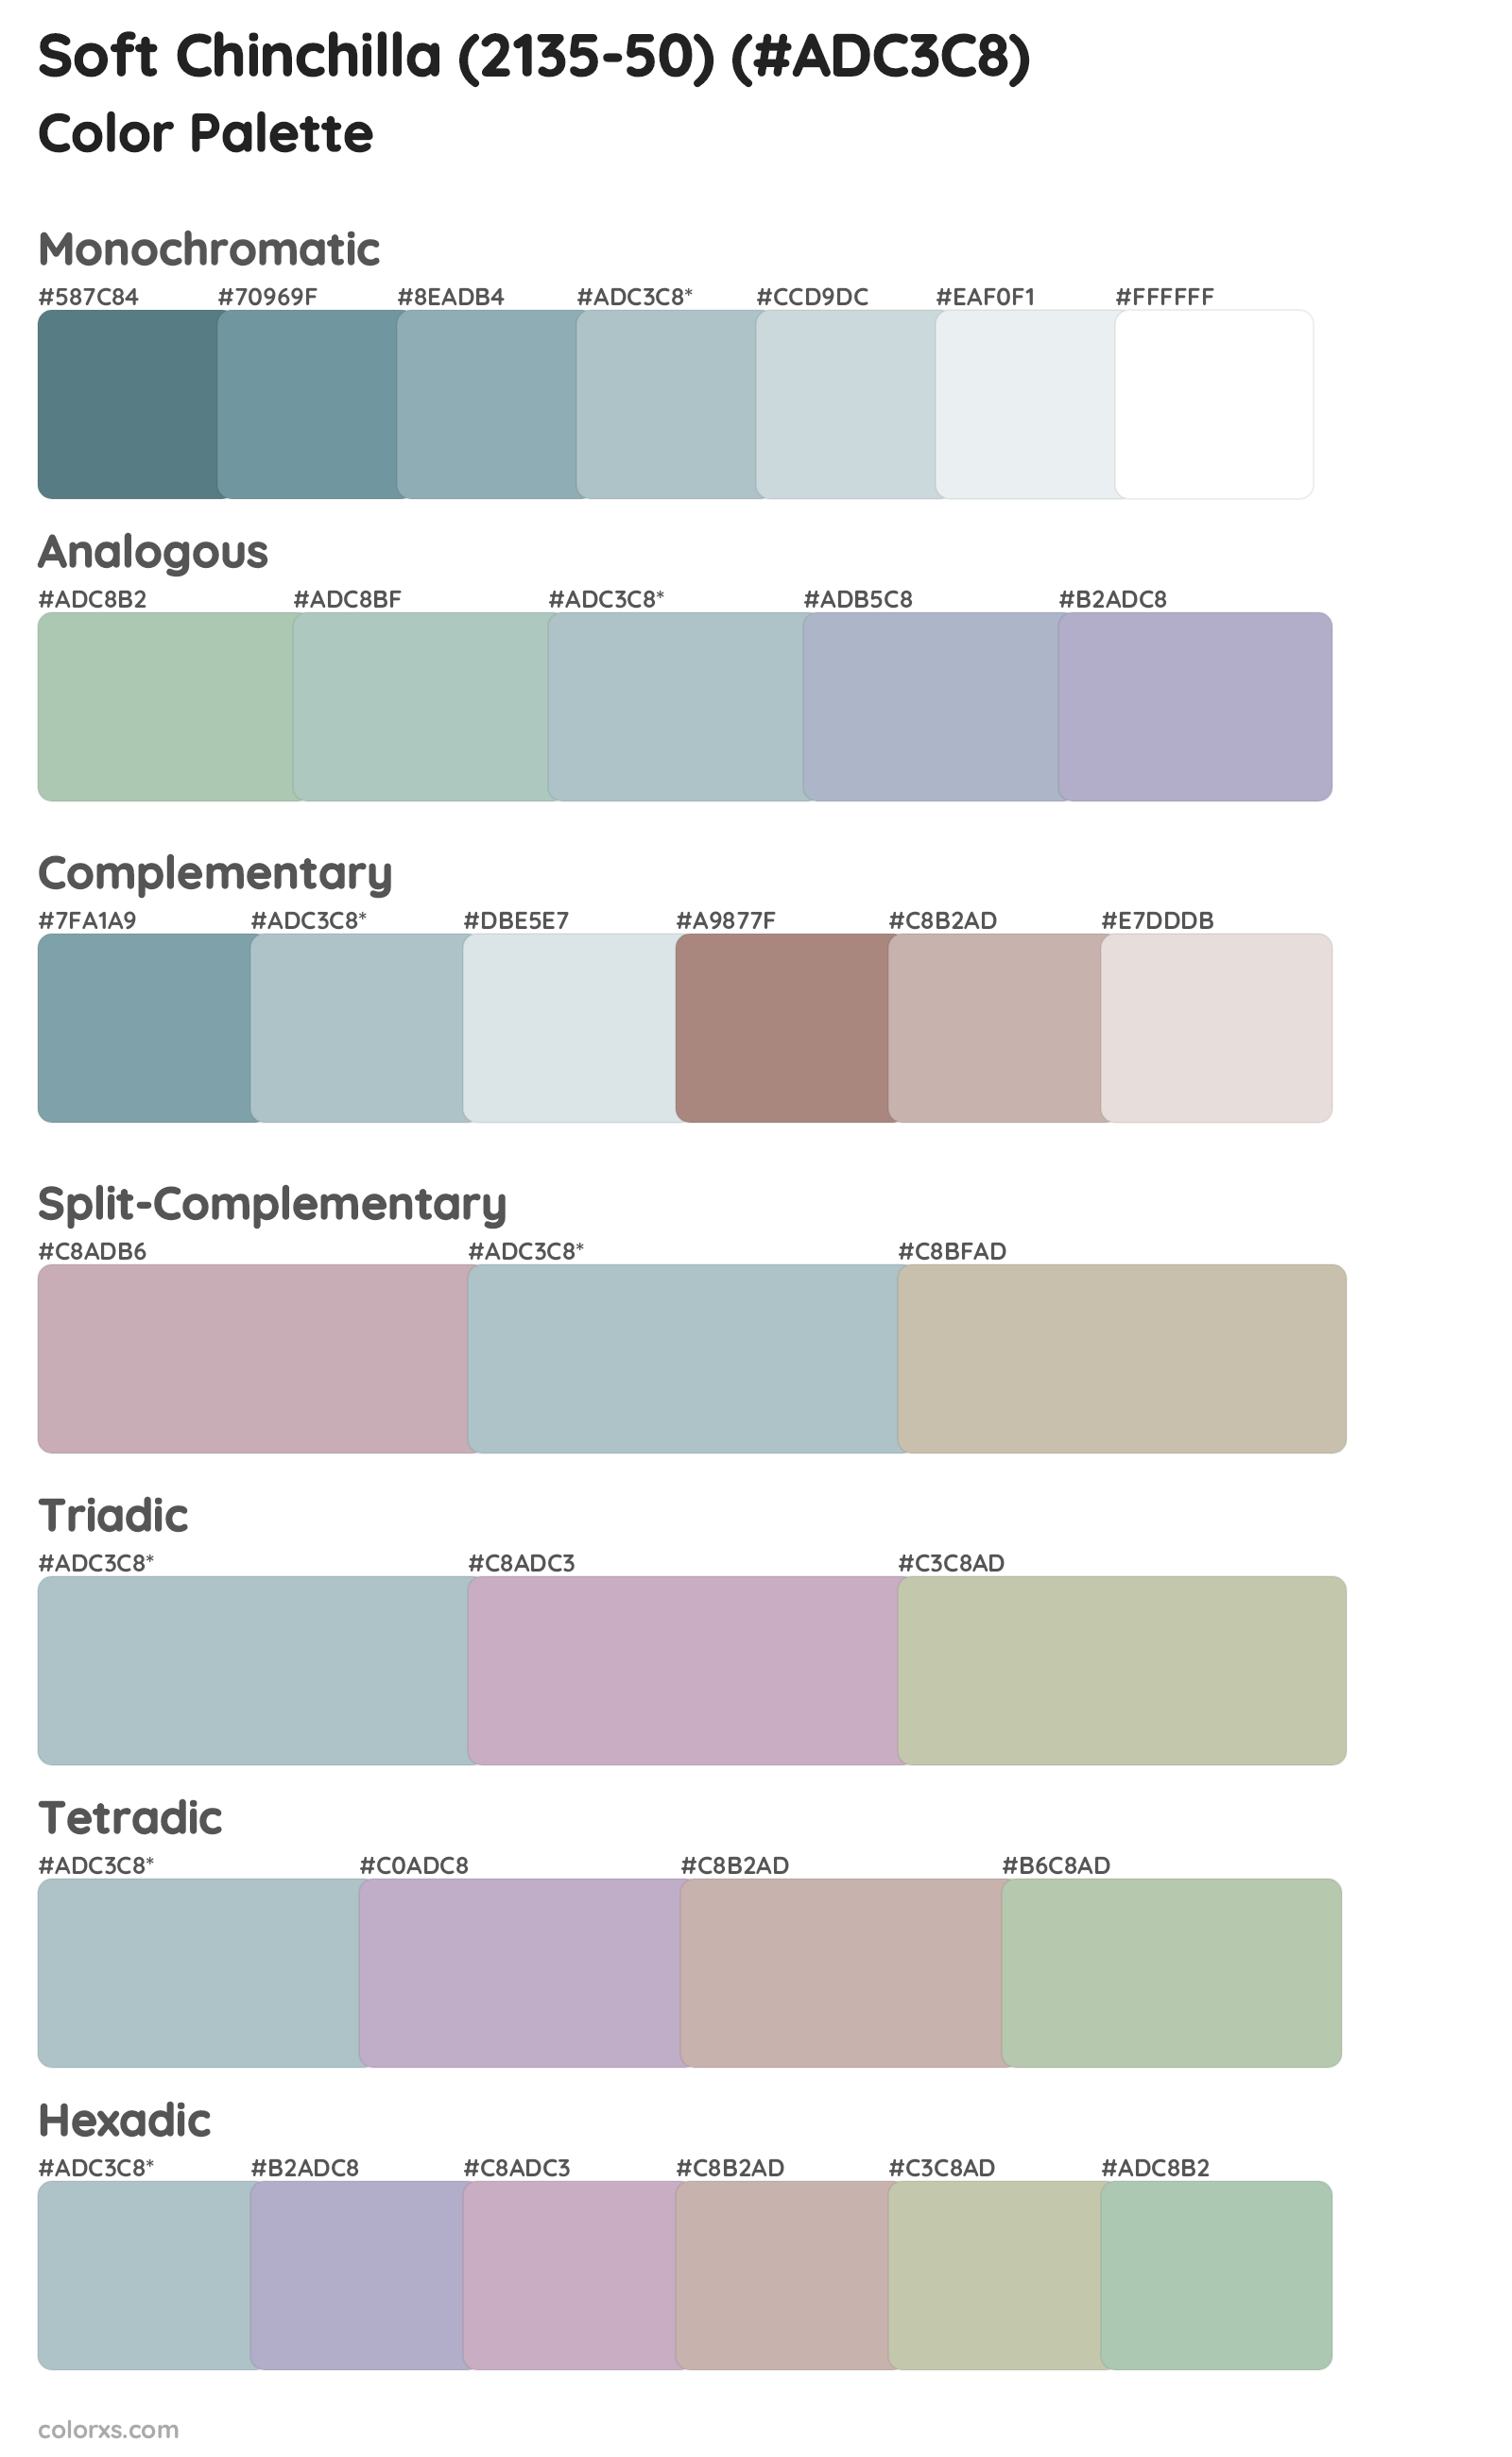 Soft Chinchilla (2135-50) Color Scheme Palettes